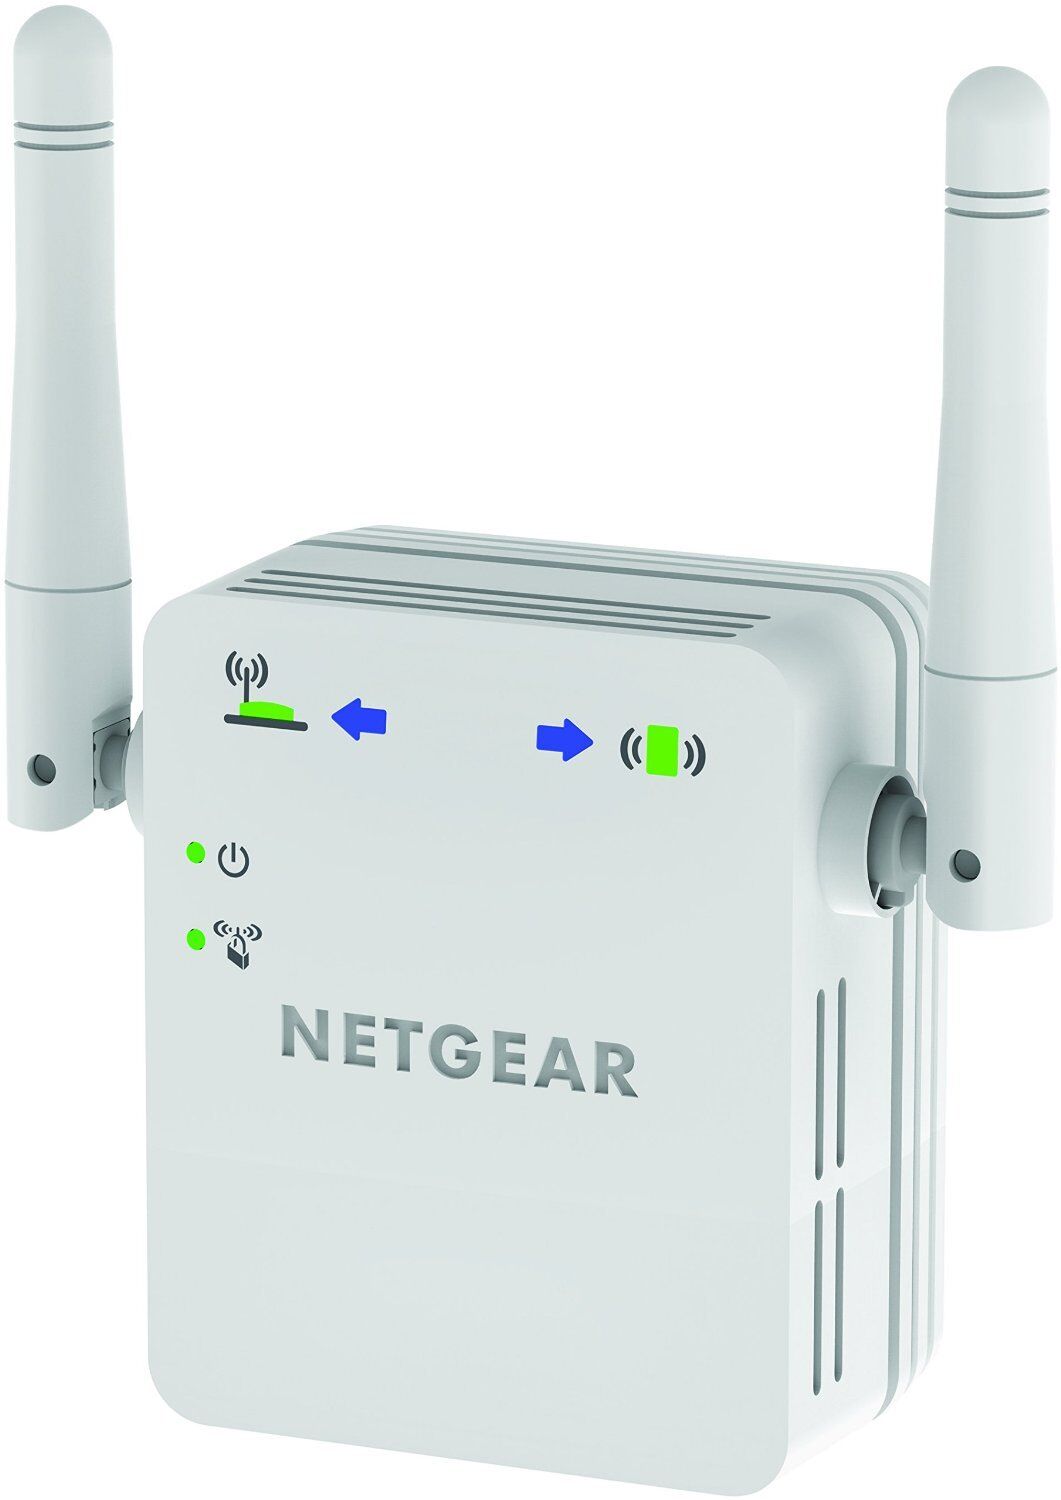 Netgear WN3000RP Universal WiFi Range Extender Extend wireless network coverage